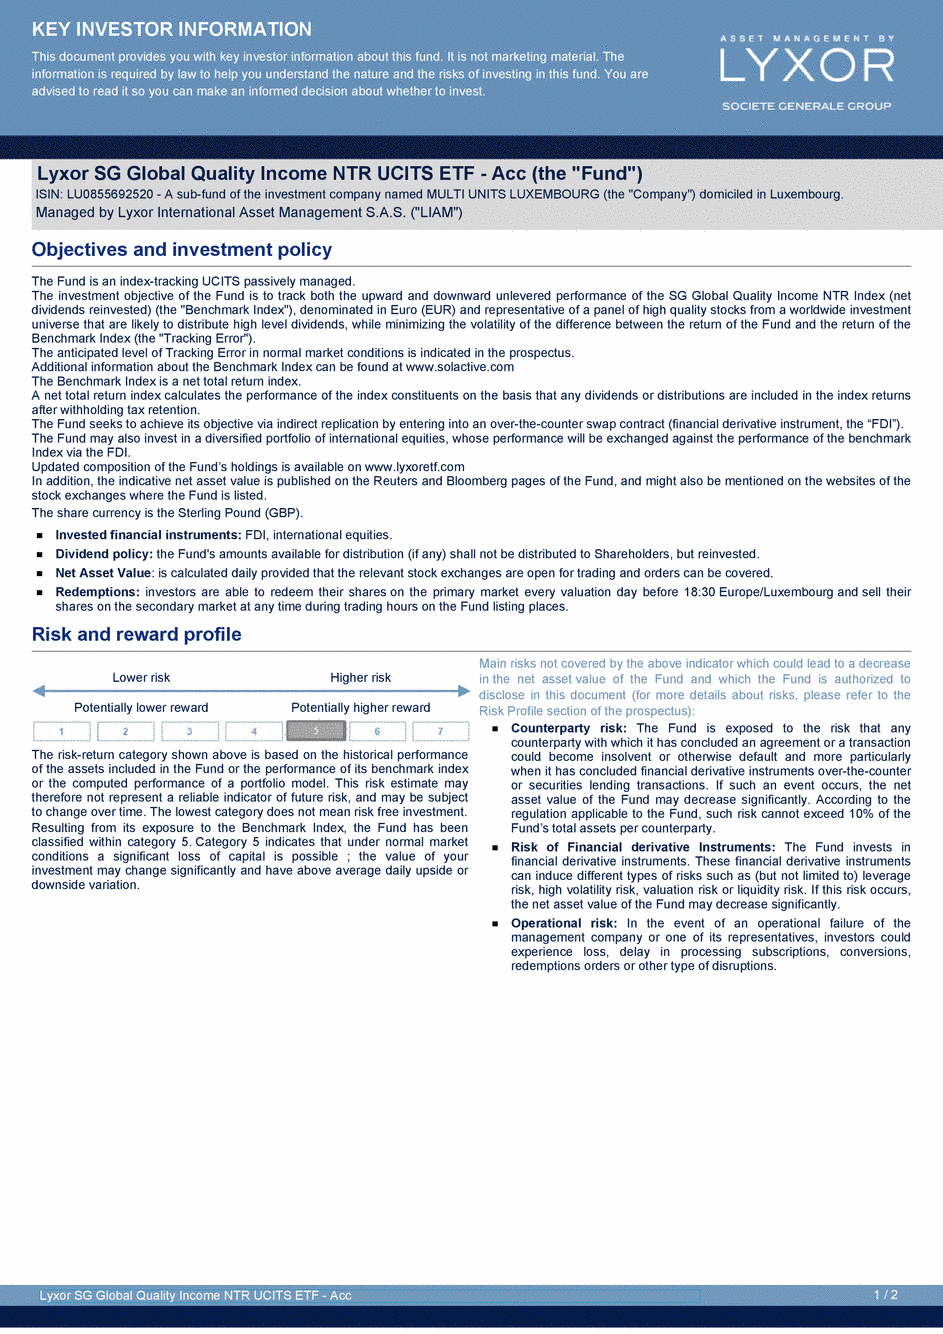 DICI Lyxor SG Global Quality Income NTR UCITS ETF - Acc - 19/02/2021 - Anglais